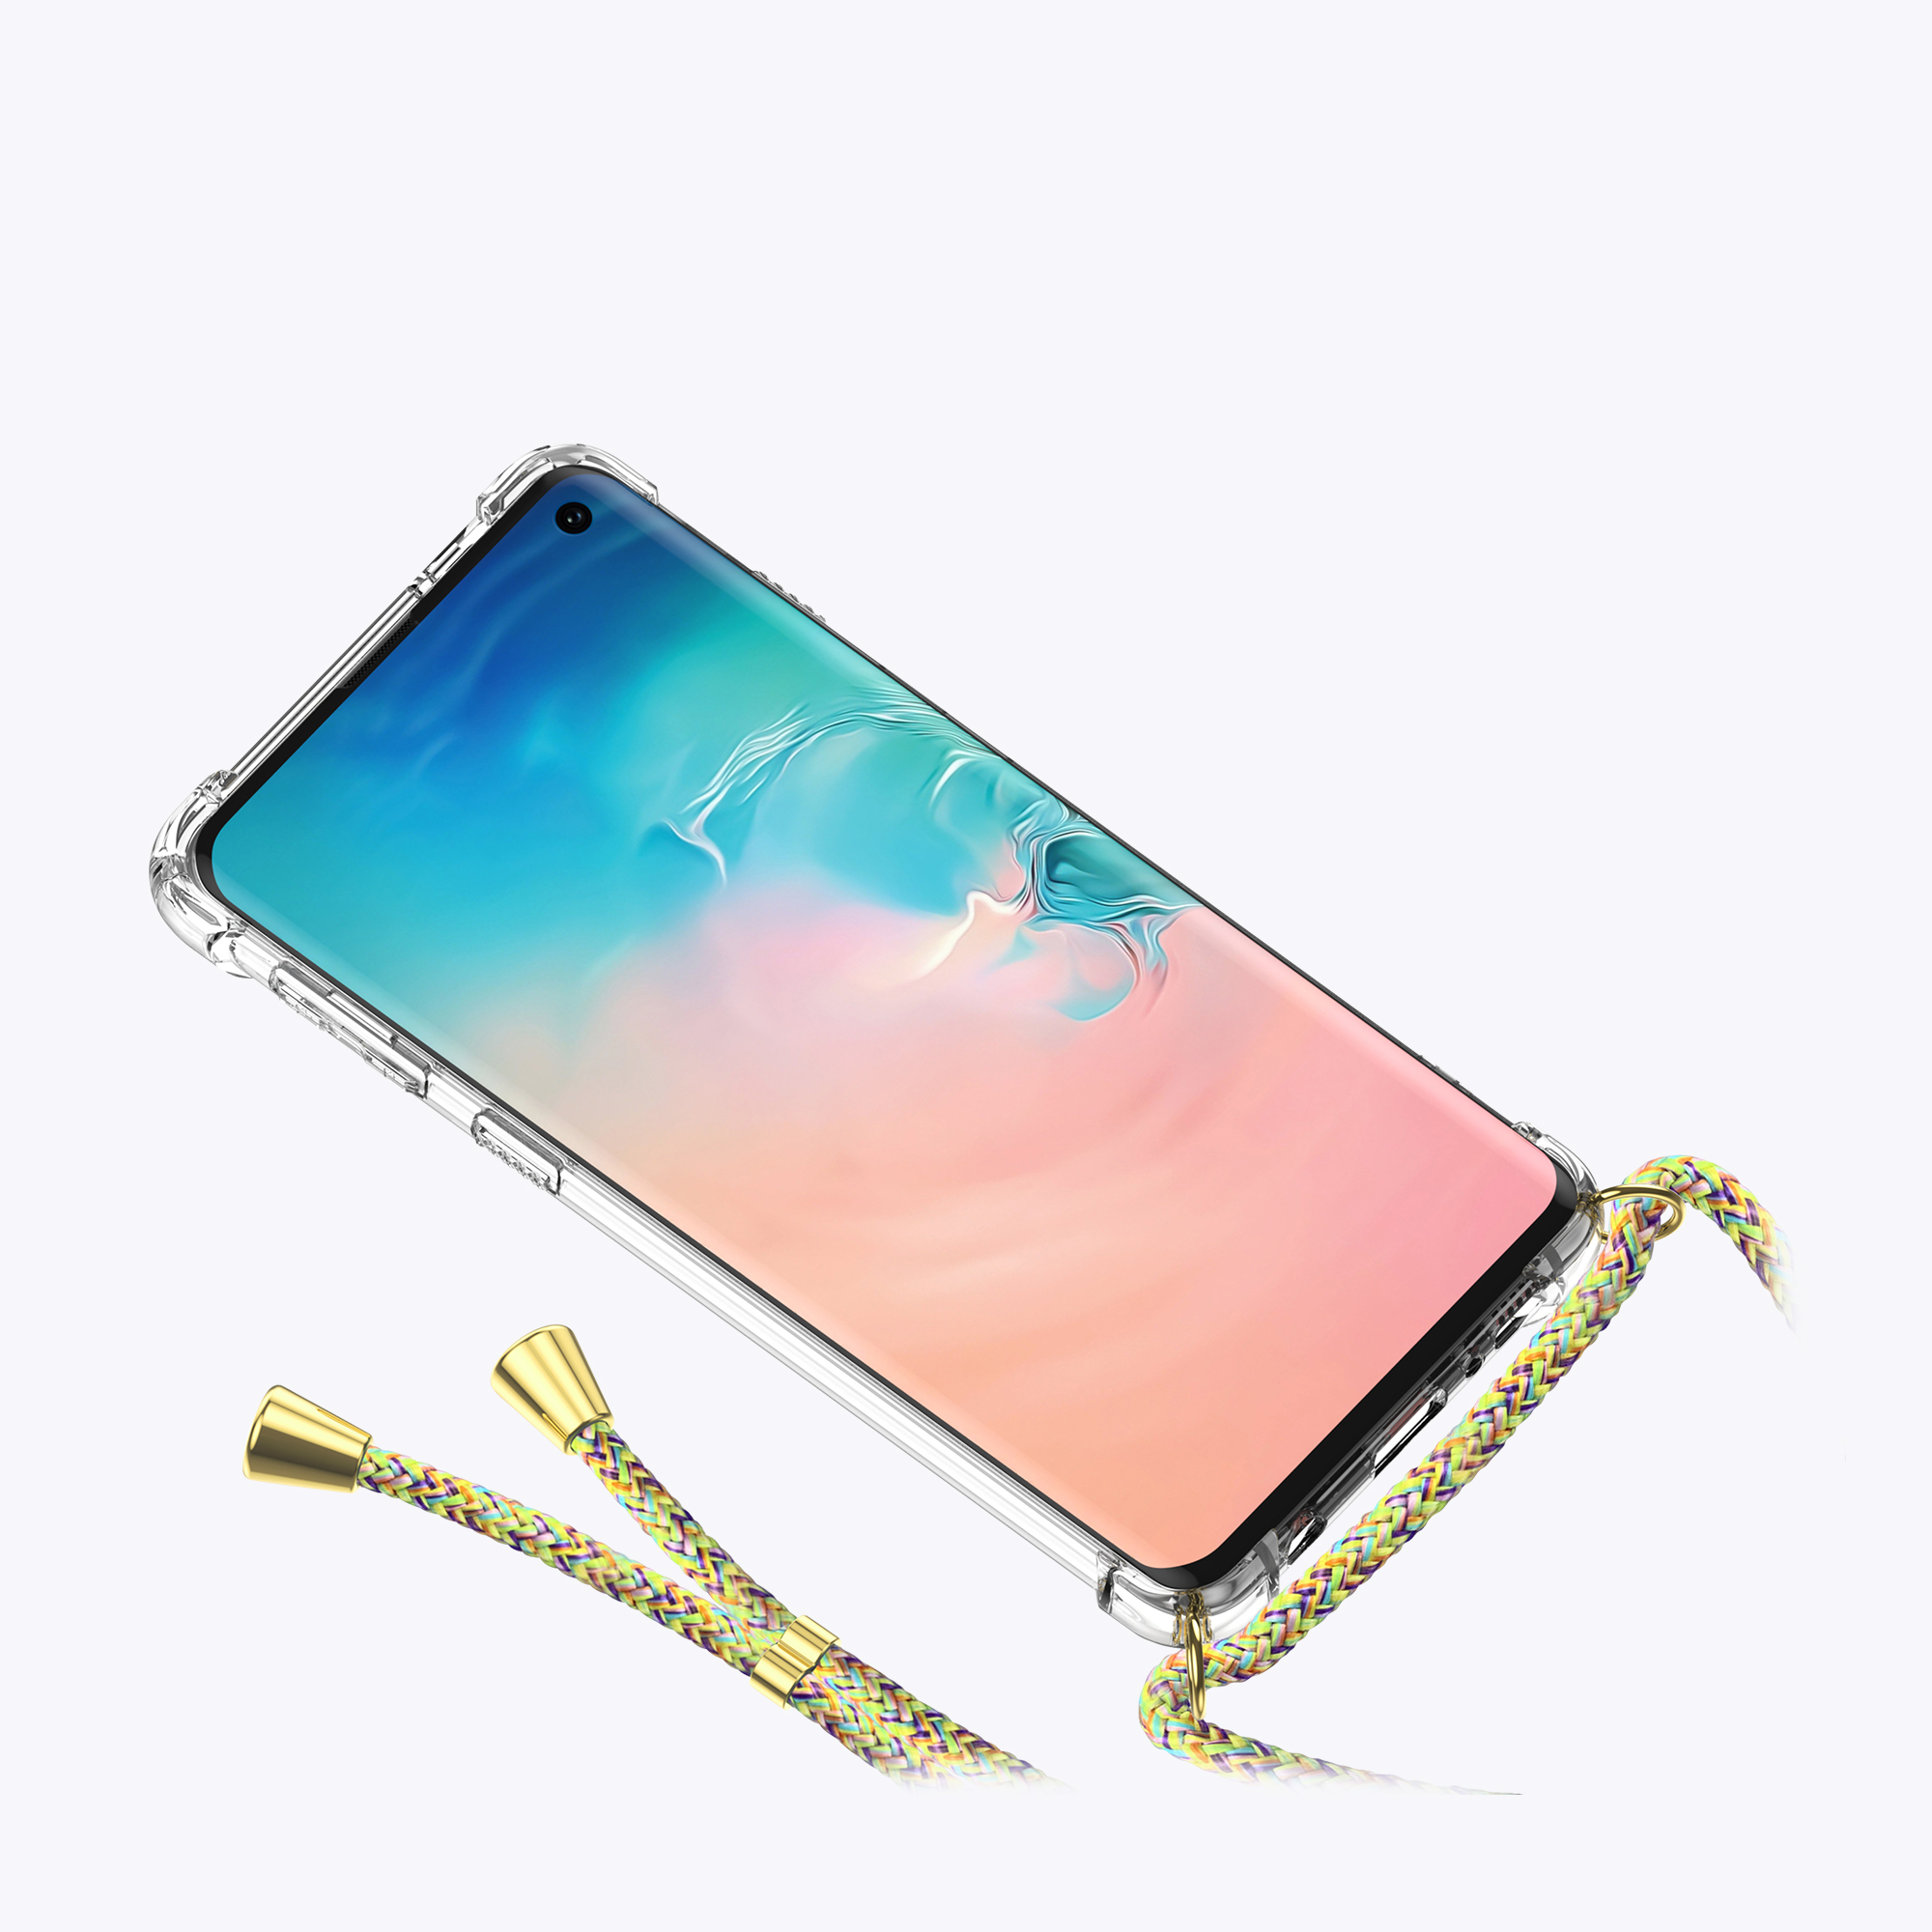 XLAYER Handy-Kette Transparent, Samsung Galaxy S10 217408